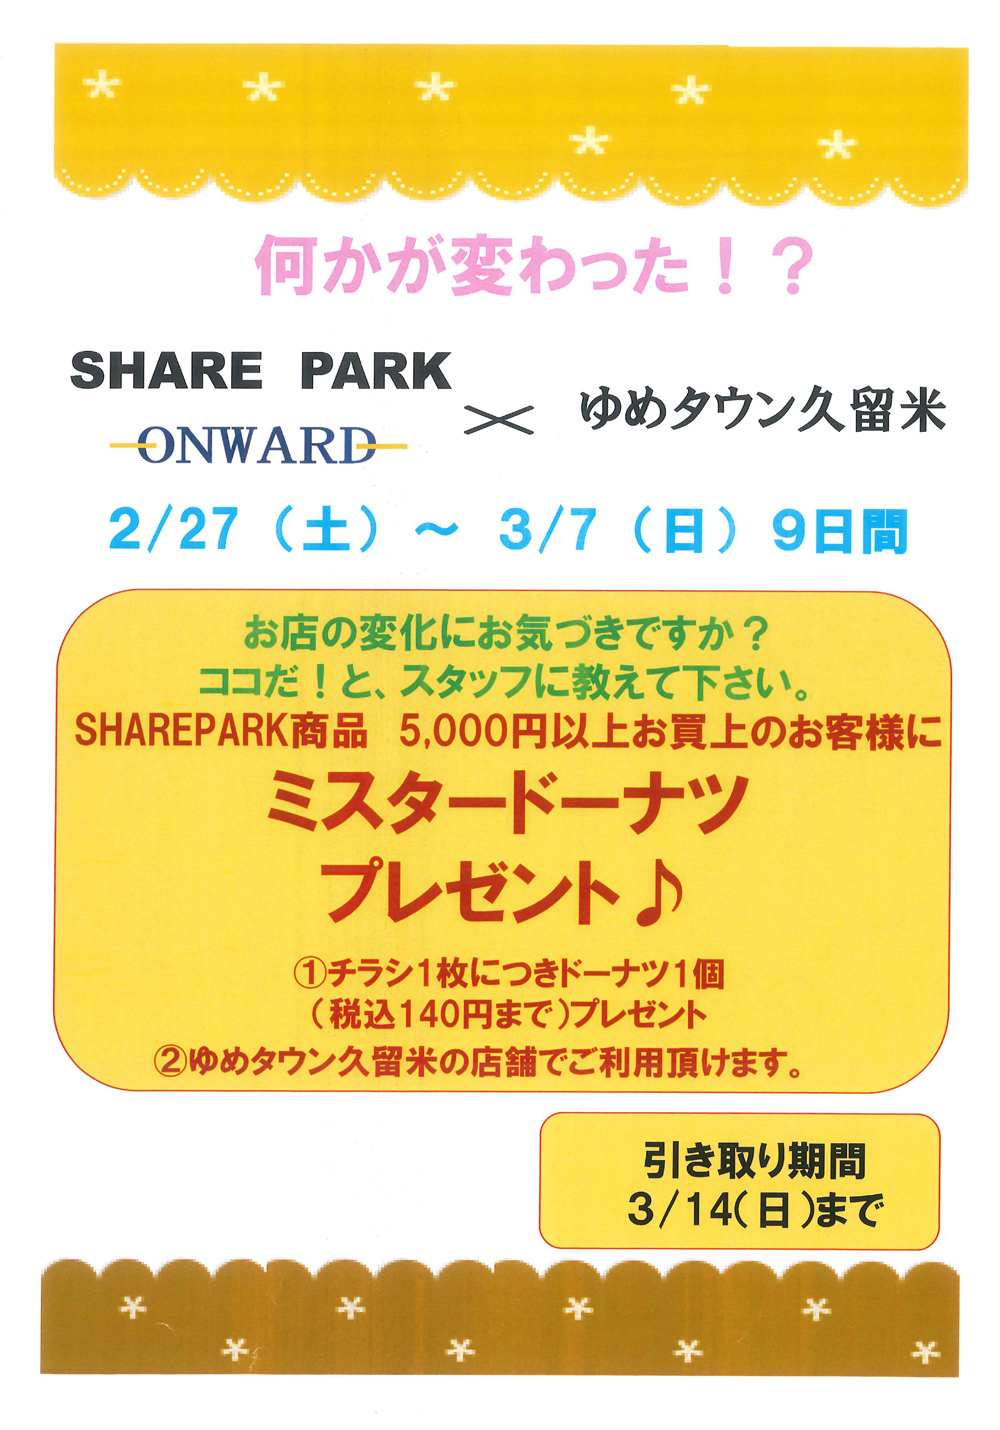 SHAREPARK・ONWARD